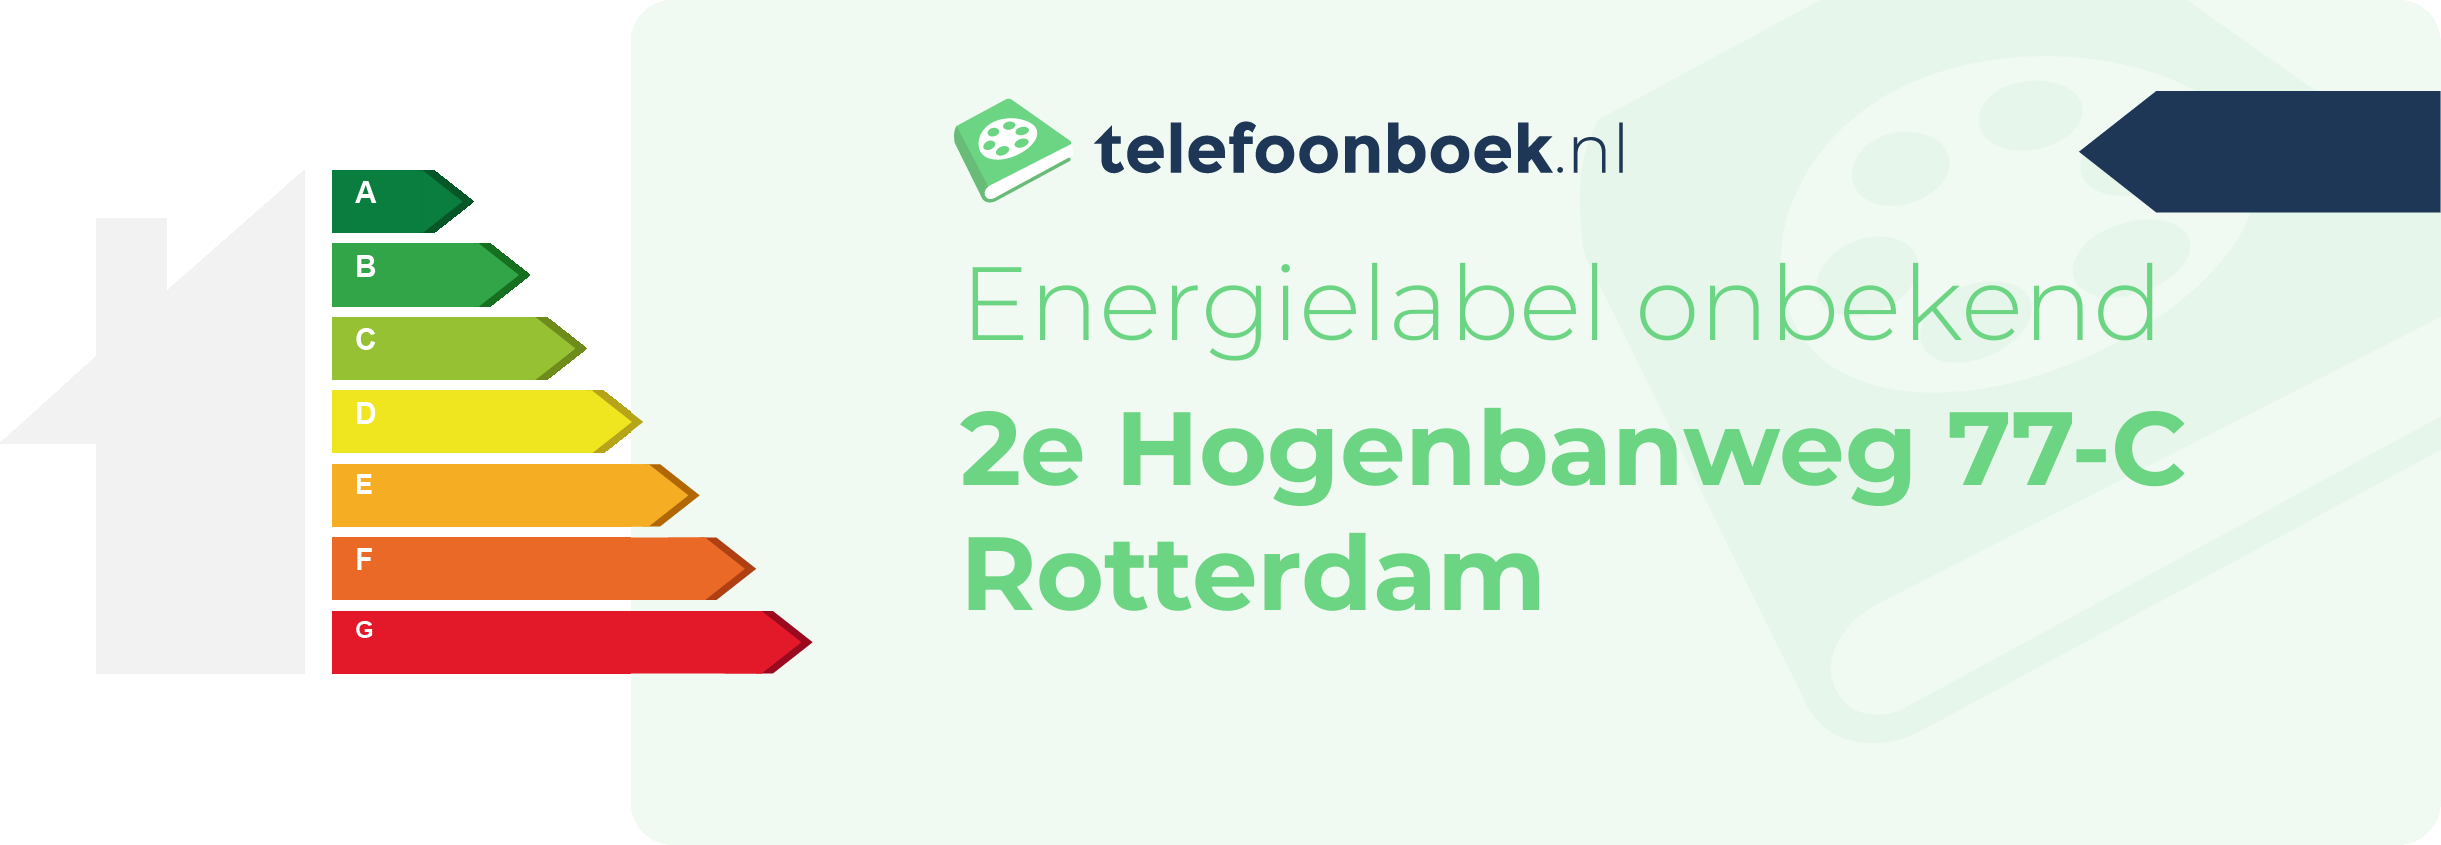 Energielabel 2e Hogenbanweg 77-C Rotterdam